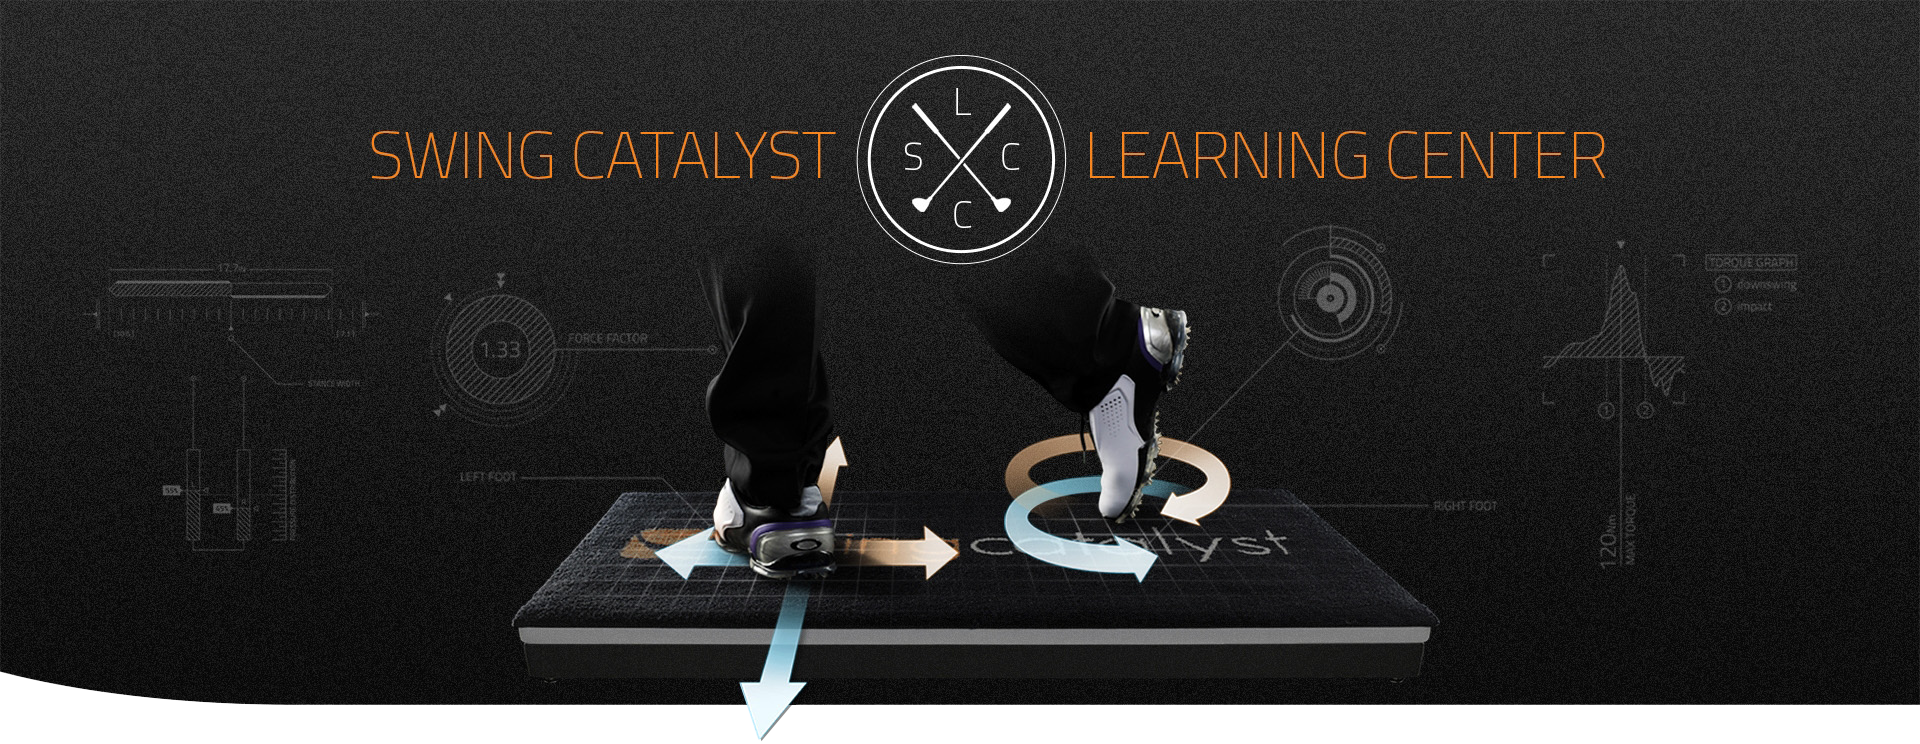 Swing Catalyst - Learning Center - Swing Catalyst